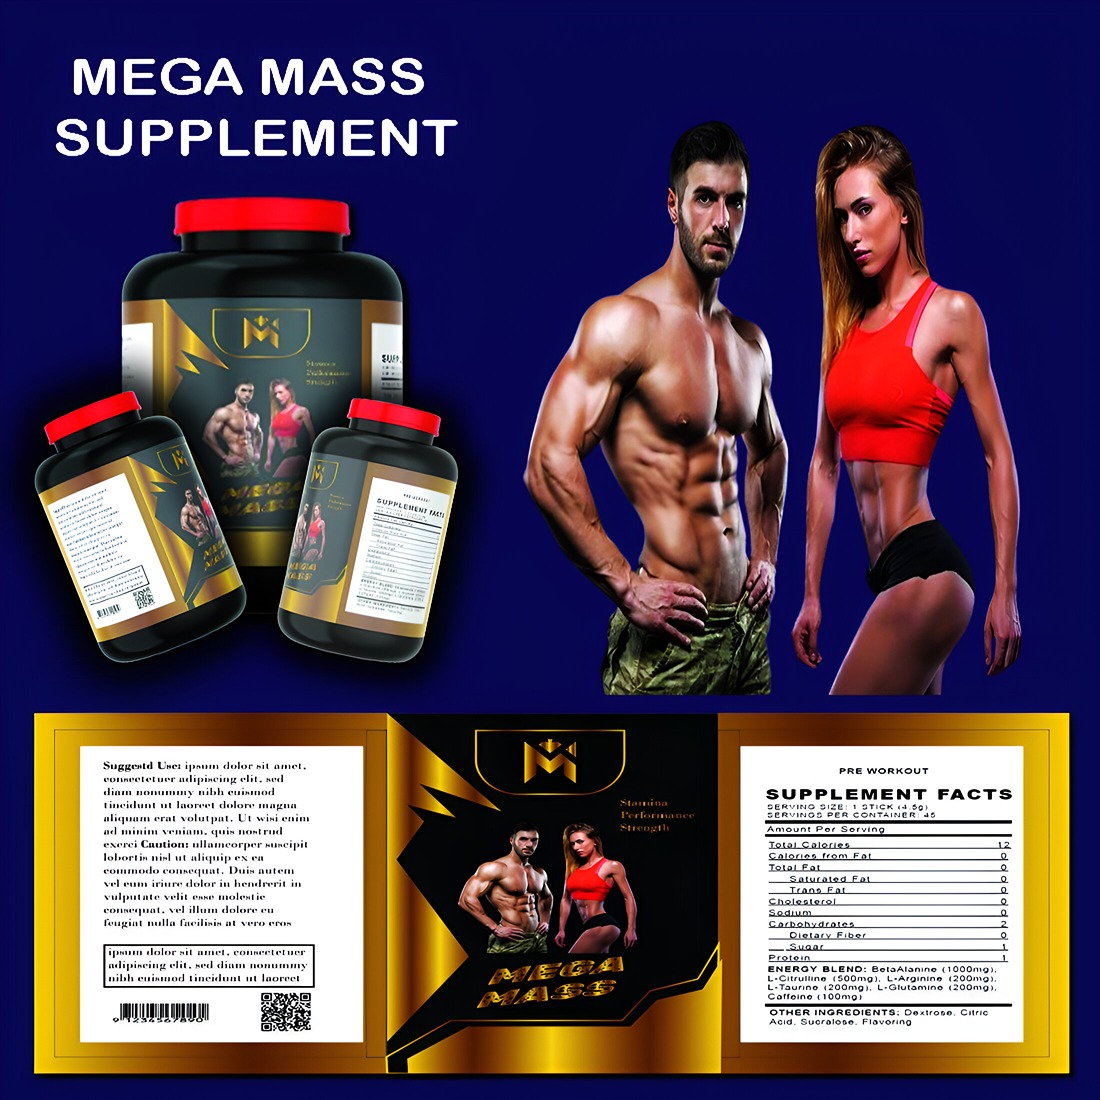 Mega Mass - Gym Supplements Lebel Design Template cover image.